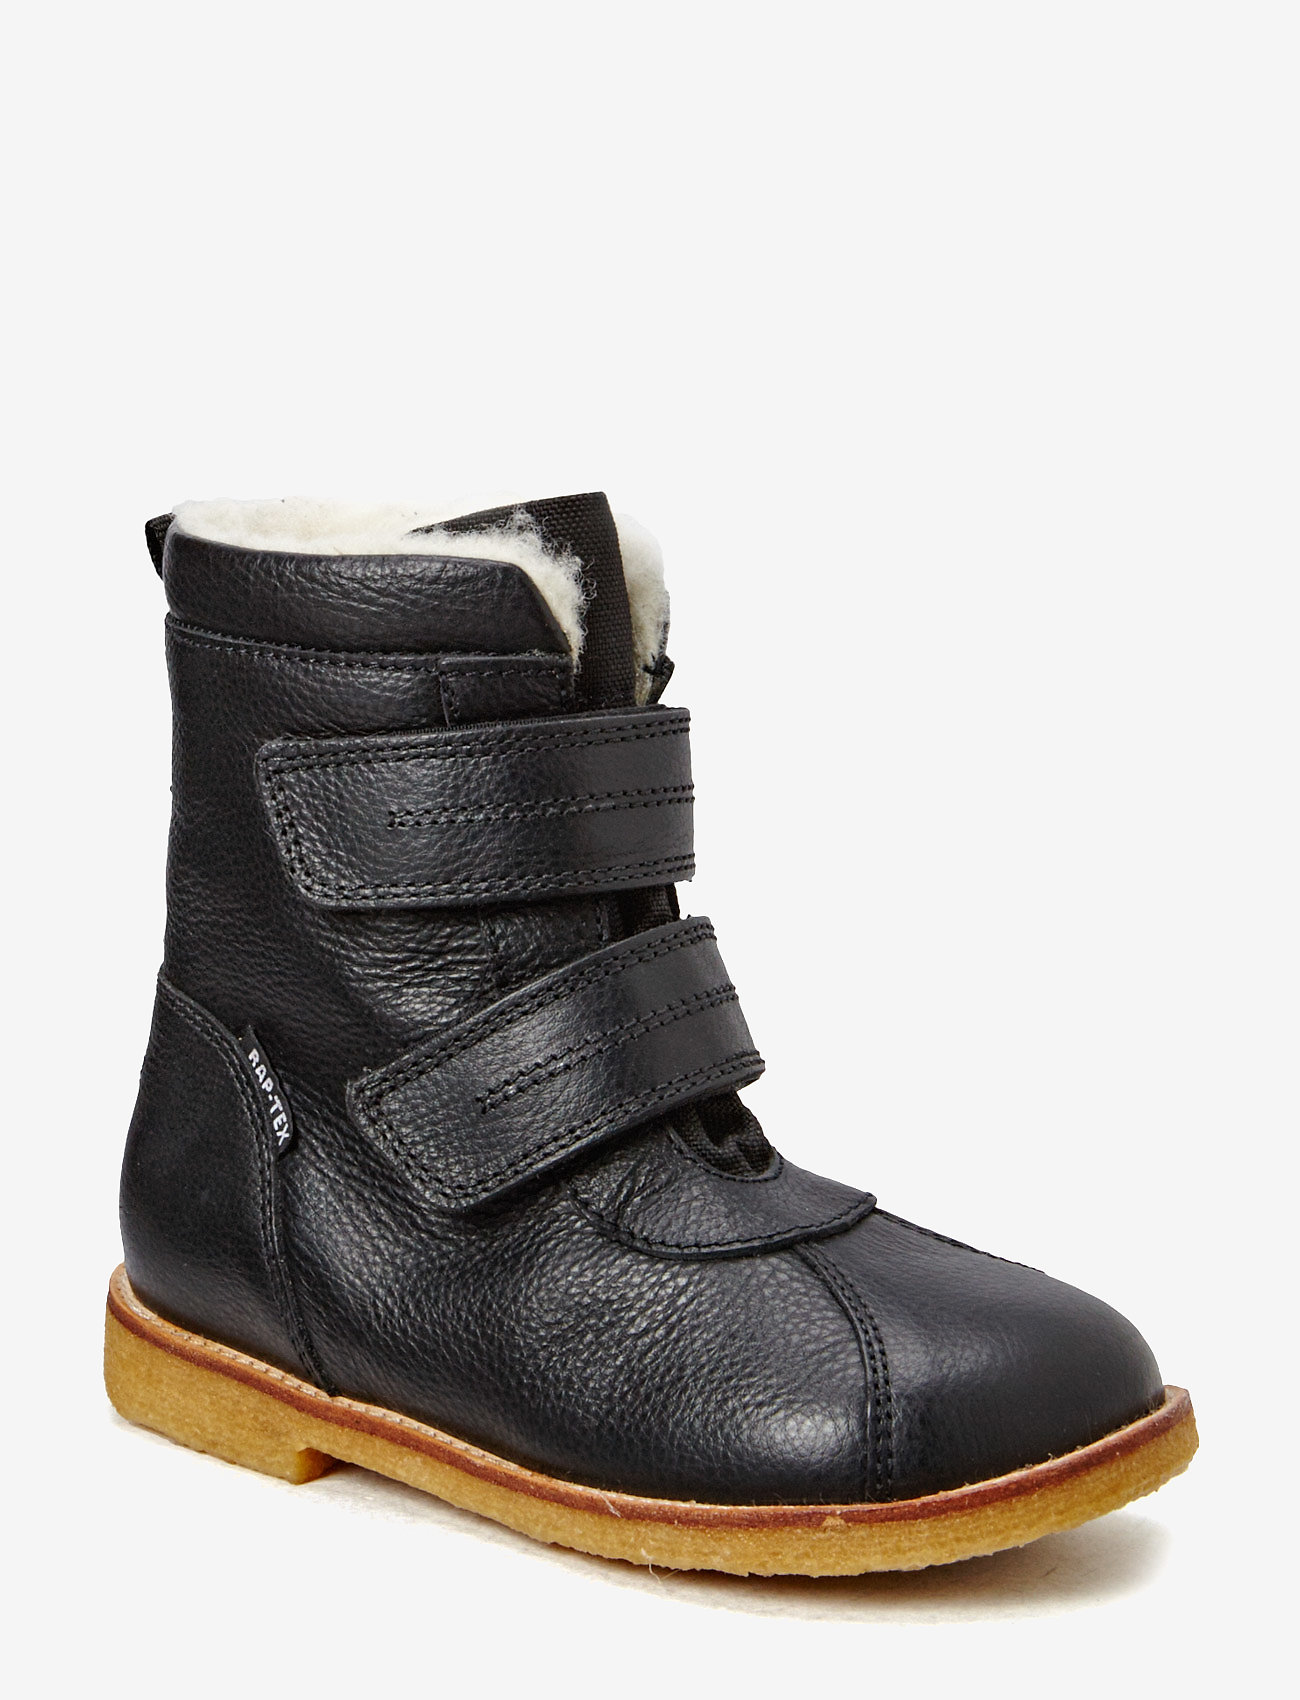 black velcro boots